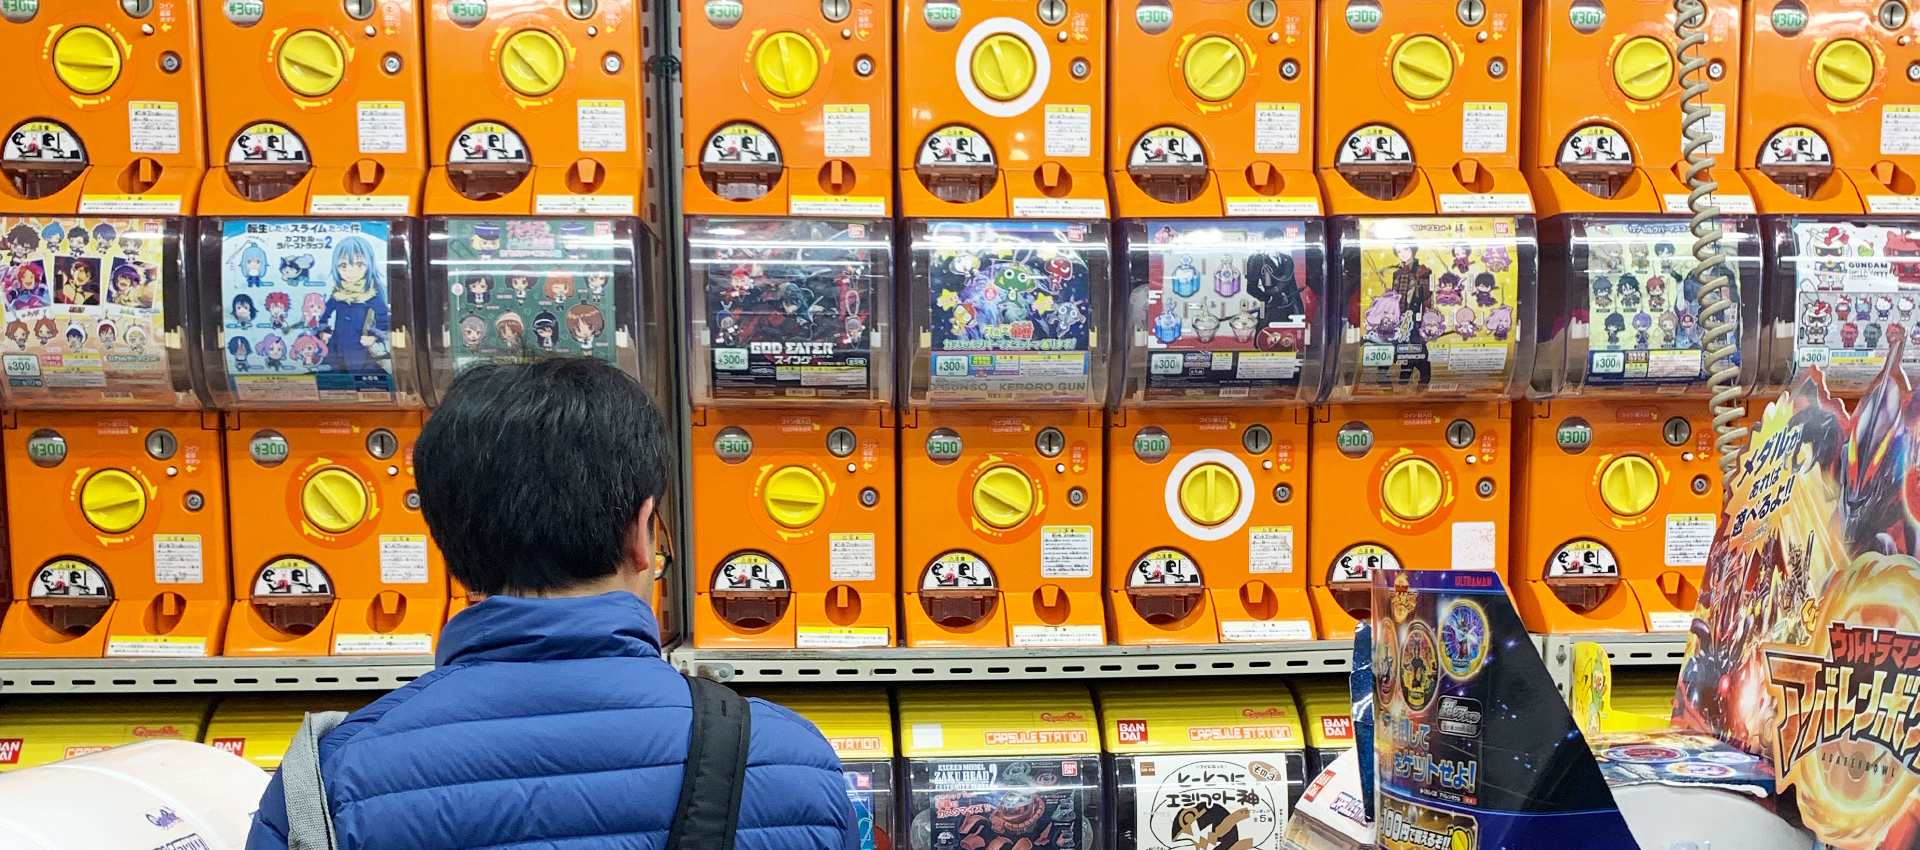 Japanese Gachapon Vending Machines Dedicated To the Anime Jujutsu Kaisen in  Sunshine City. Editorial Photo - Image of gasha, japan: 242135851